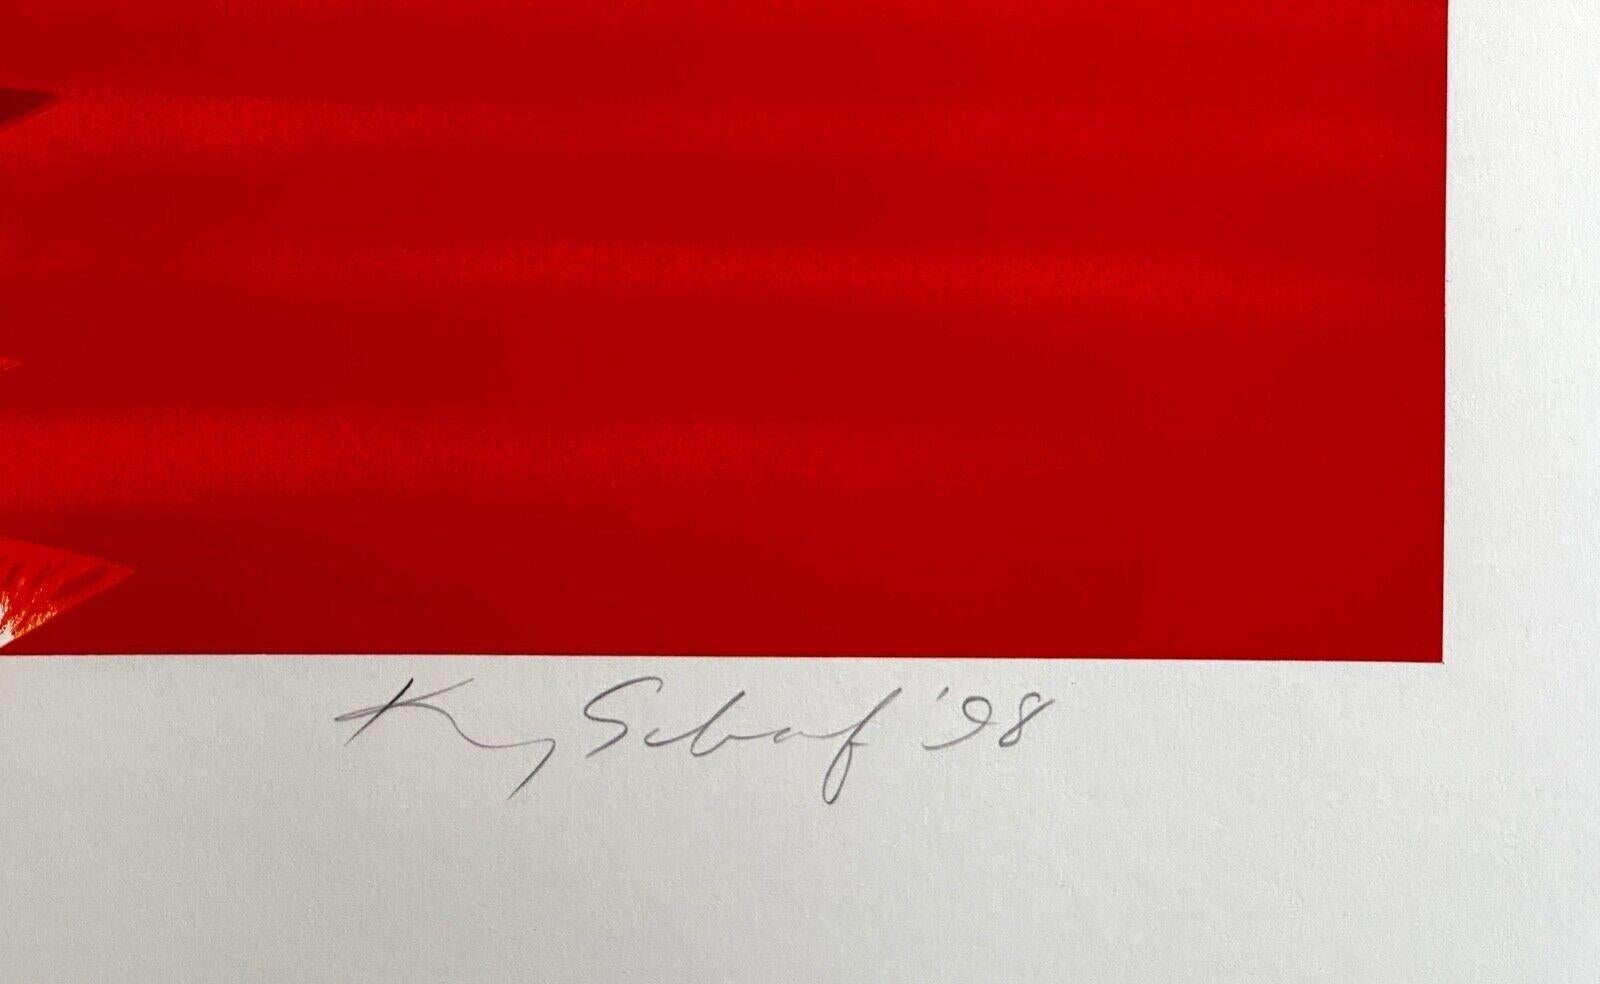 Artist: Kenny Scharf
Title: Sajippe Kraka Joujesh
Medium: Silkscreen
Signed: Hand Signed

Measurements: 39